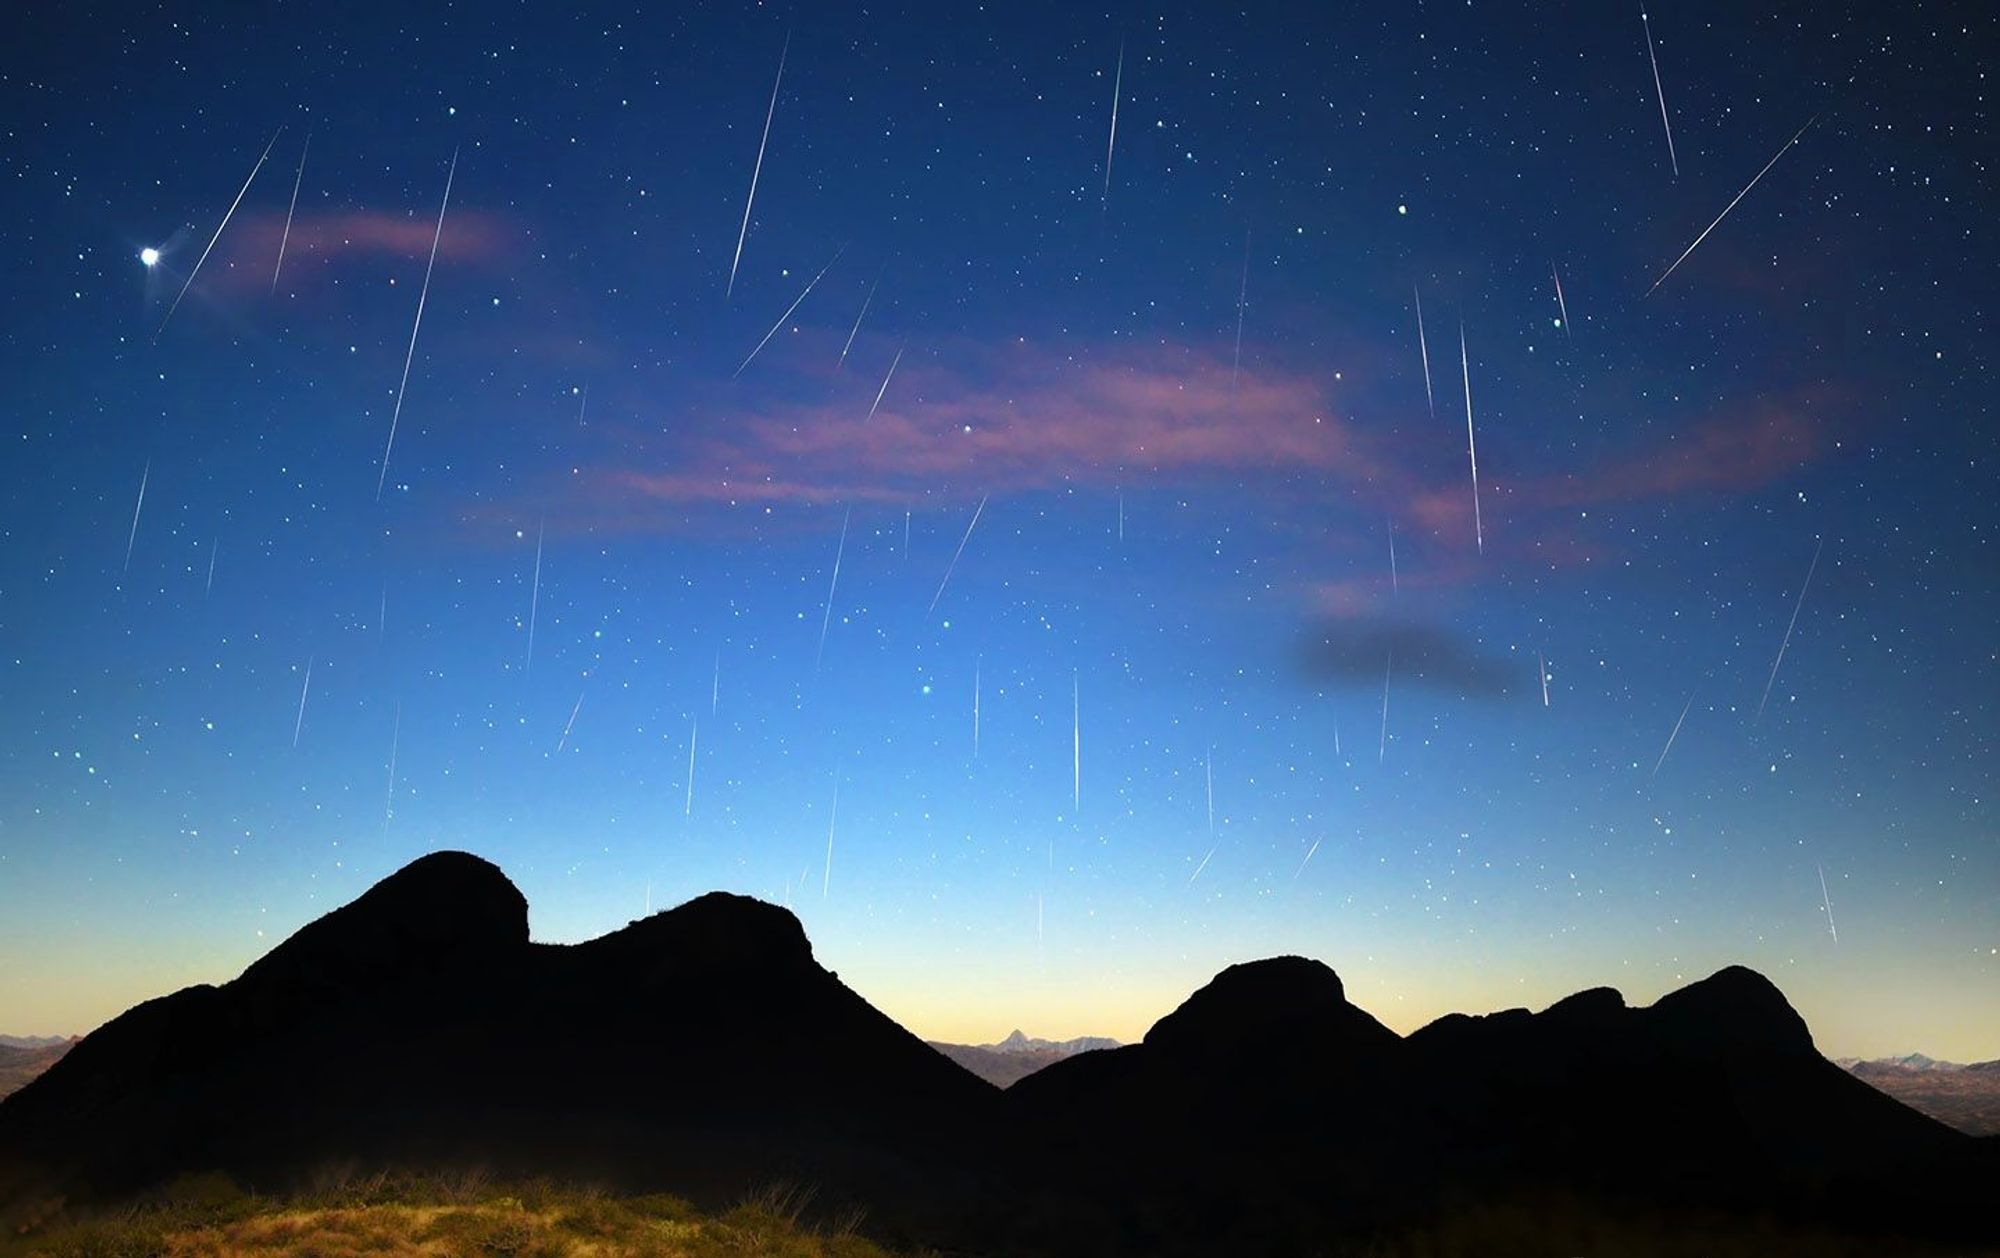 A meteor shower over desert land, before night has fallen completely.